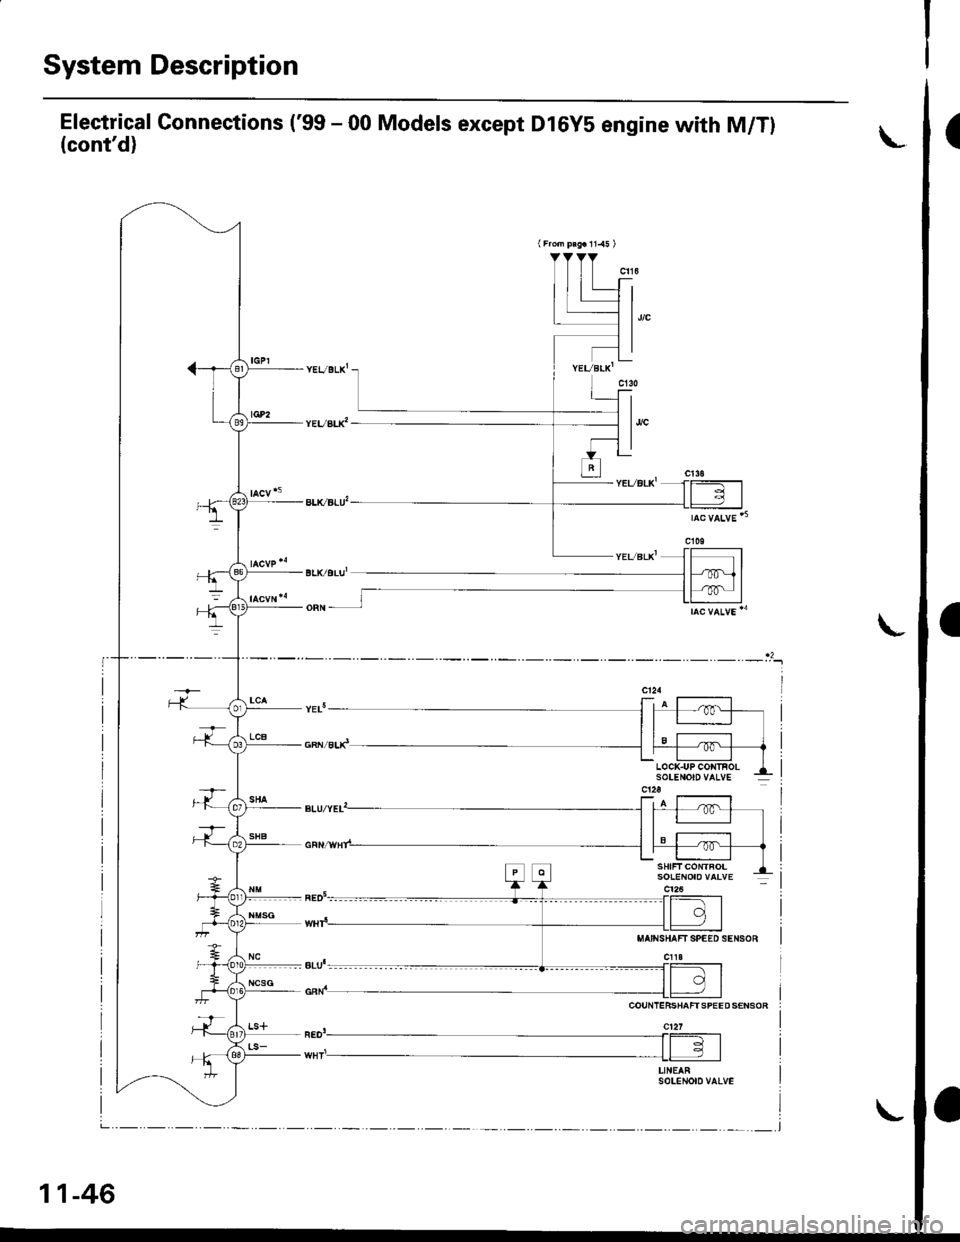 HONDA CIVIC 1997 6.G Owners Guide System Description
Electrical Connections (99 - 00 Models except Dl6Y5 engine with M/Tl
(contd)
cl09
racvP*{- BLK/eLu-lqt
pl
MAINSHAFT SPEEO SENSOR
clla
COUNIERSHAFTSPEED SENSOR
c121
tt I I
UNEARSO